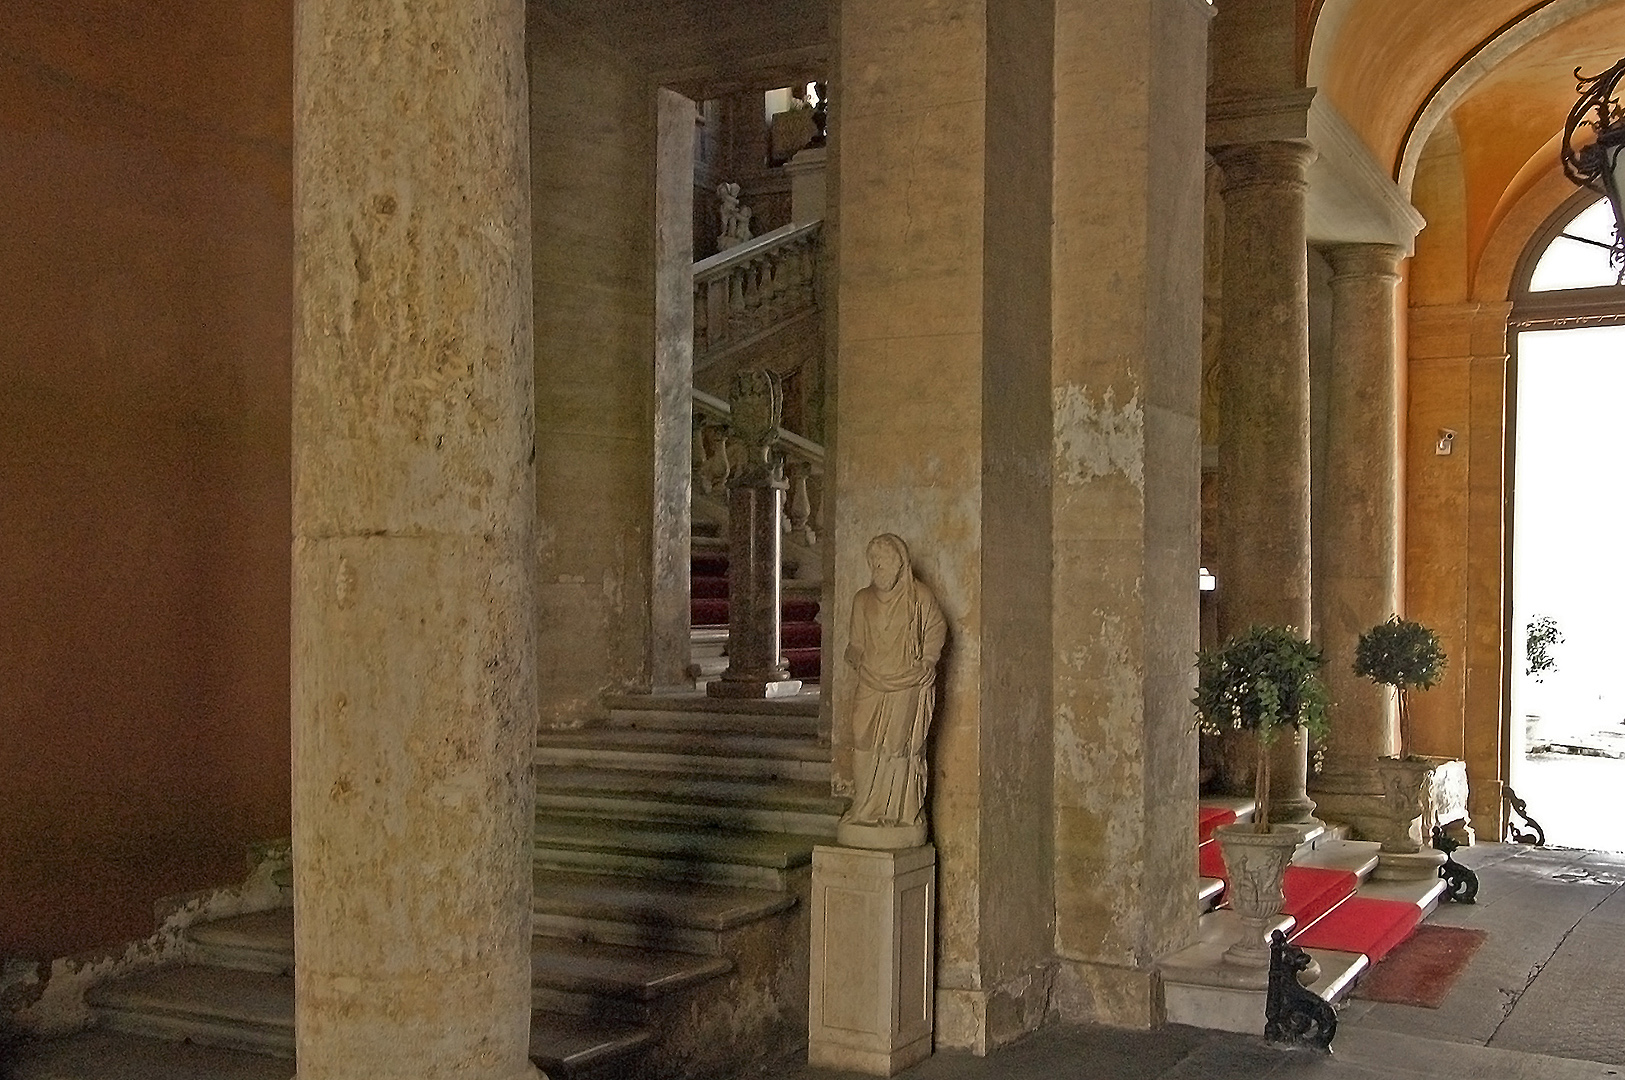 Entree van een palazzo in Rome., Entrance of a Roman palazzo.